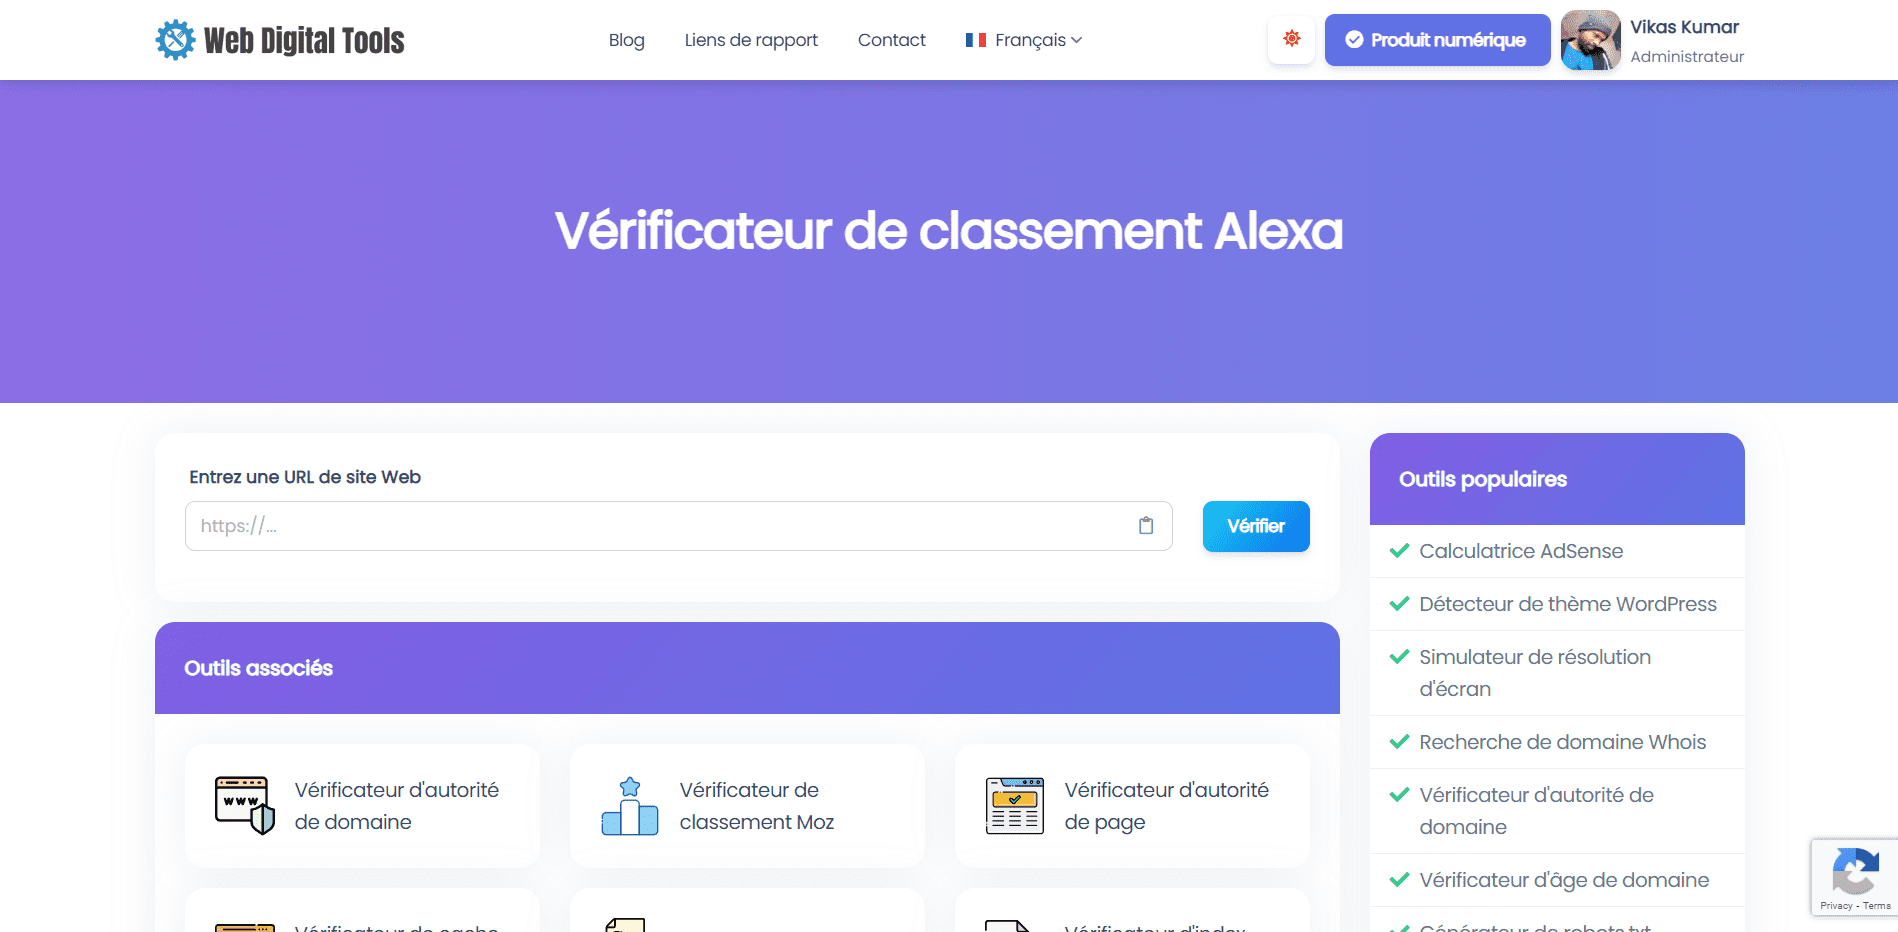 Vérificateur de classement Alexa